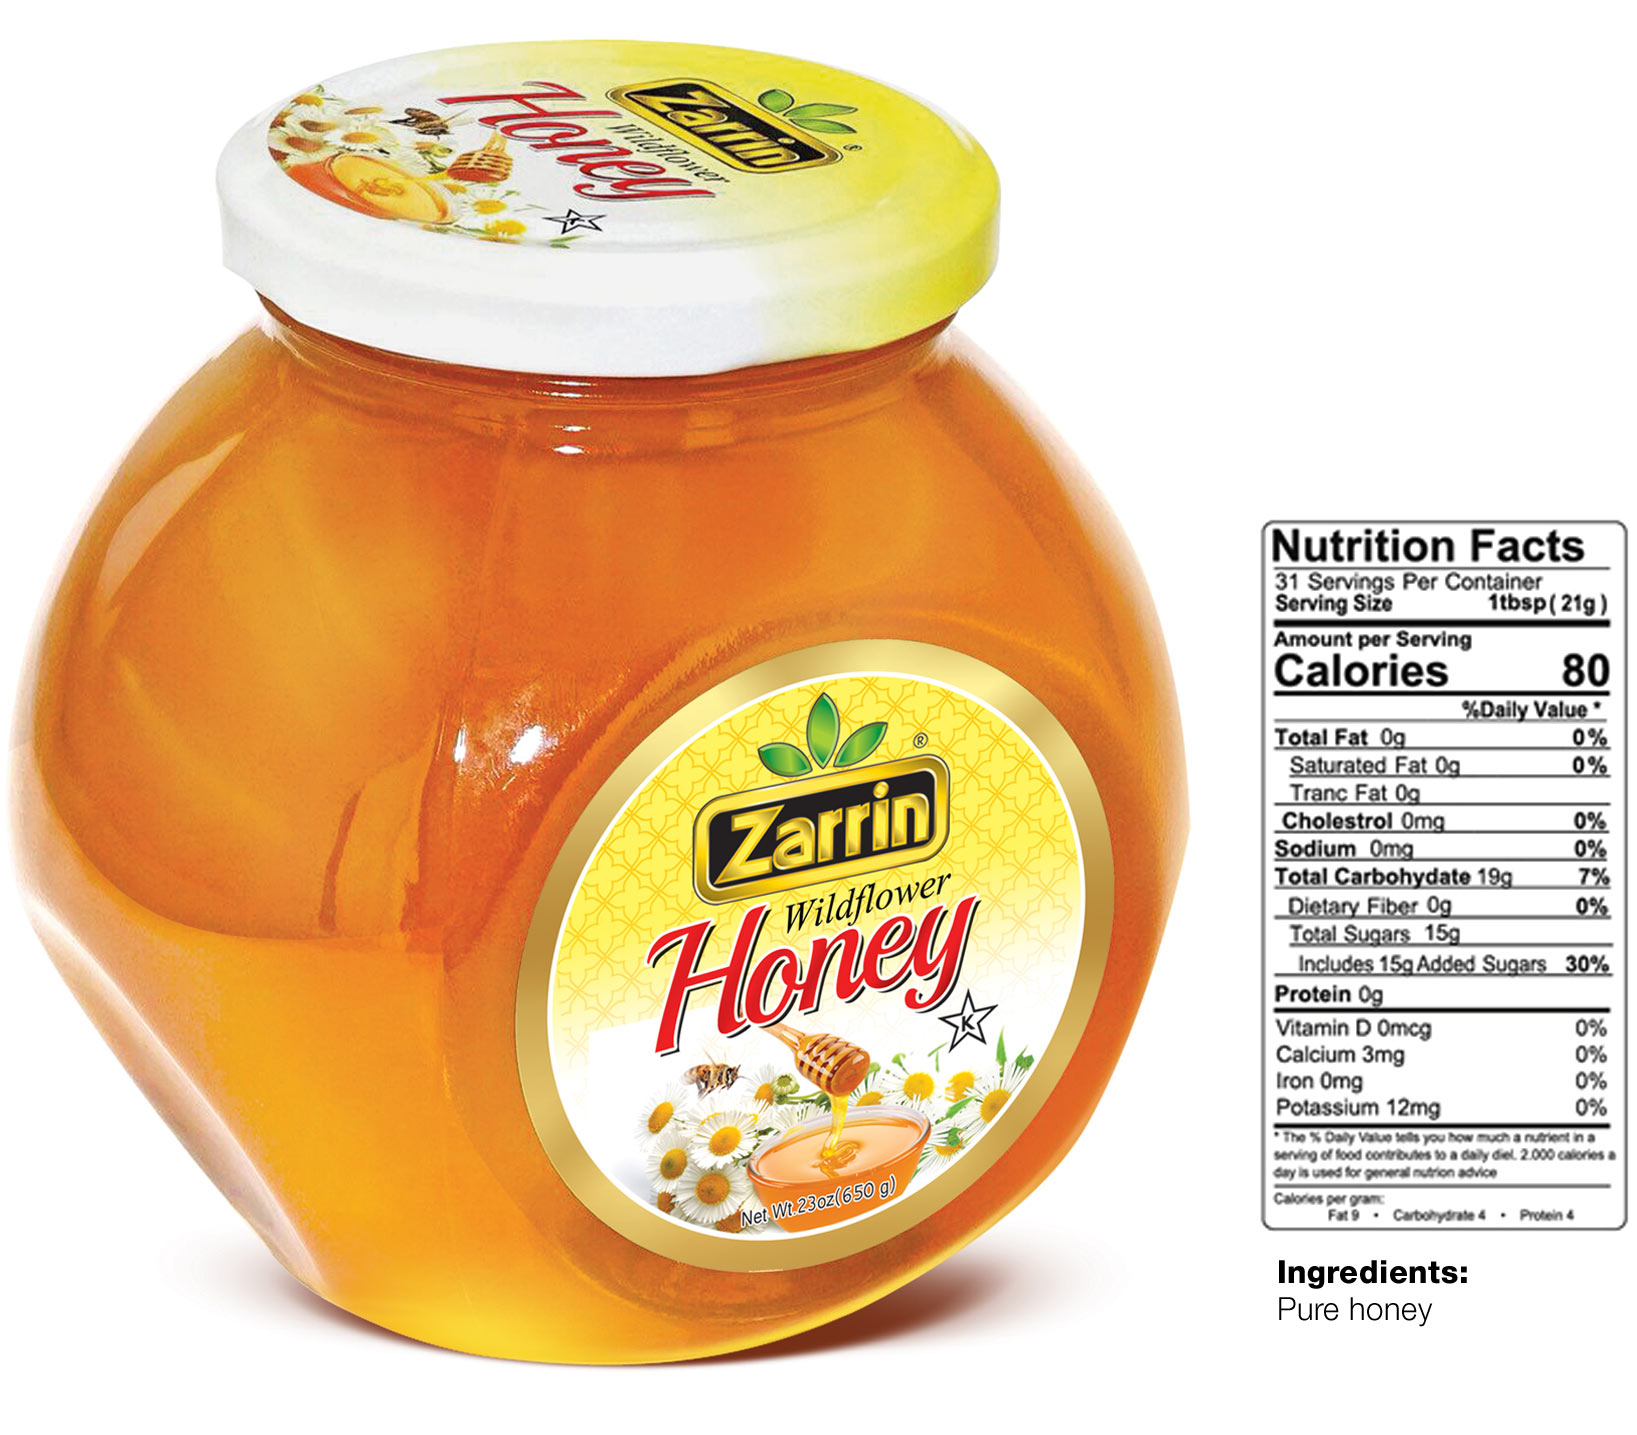 Zarrin wild flower honey in 23 oz glass jar.